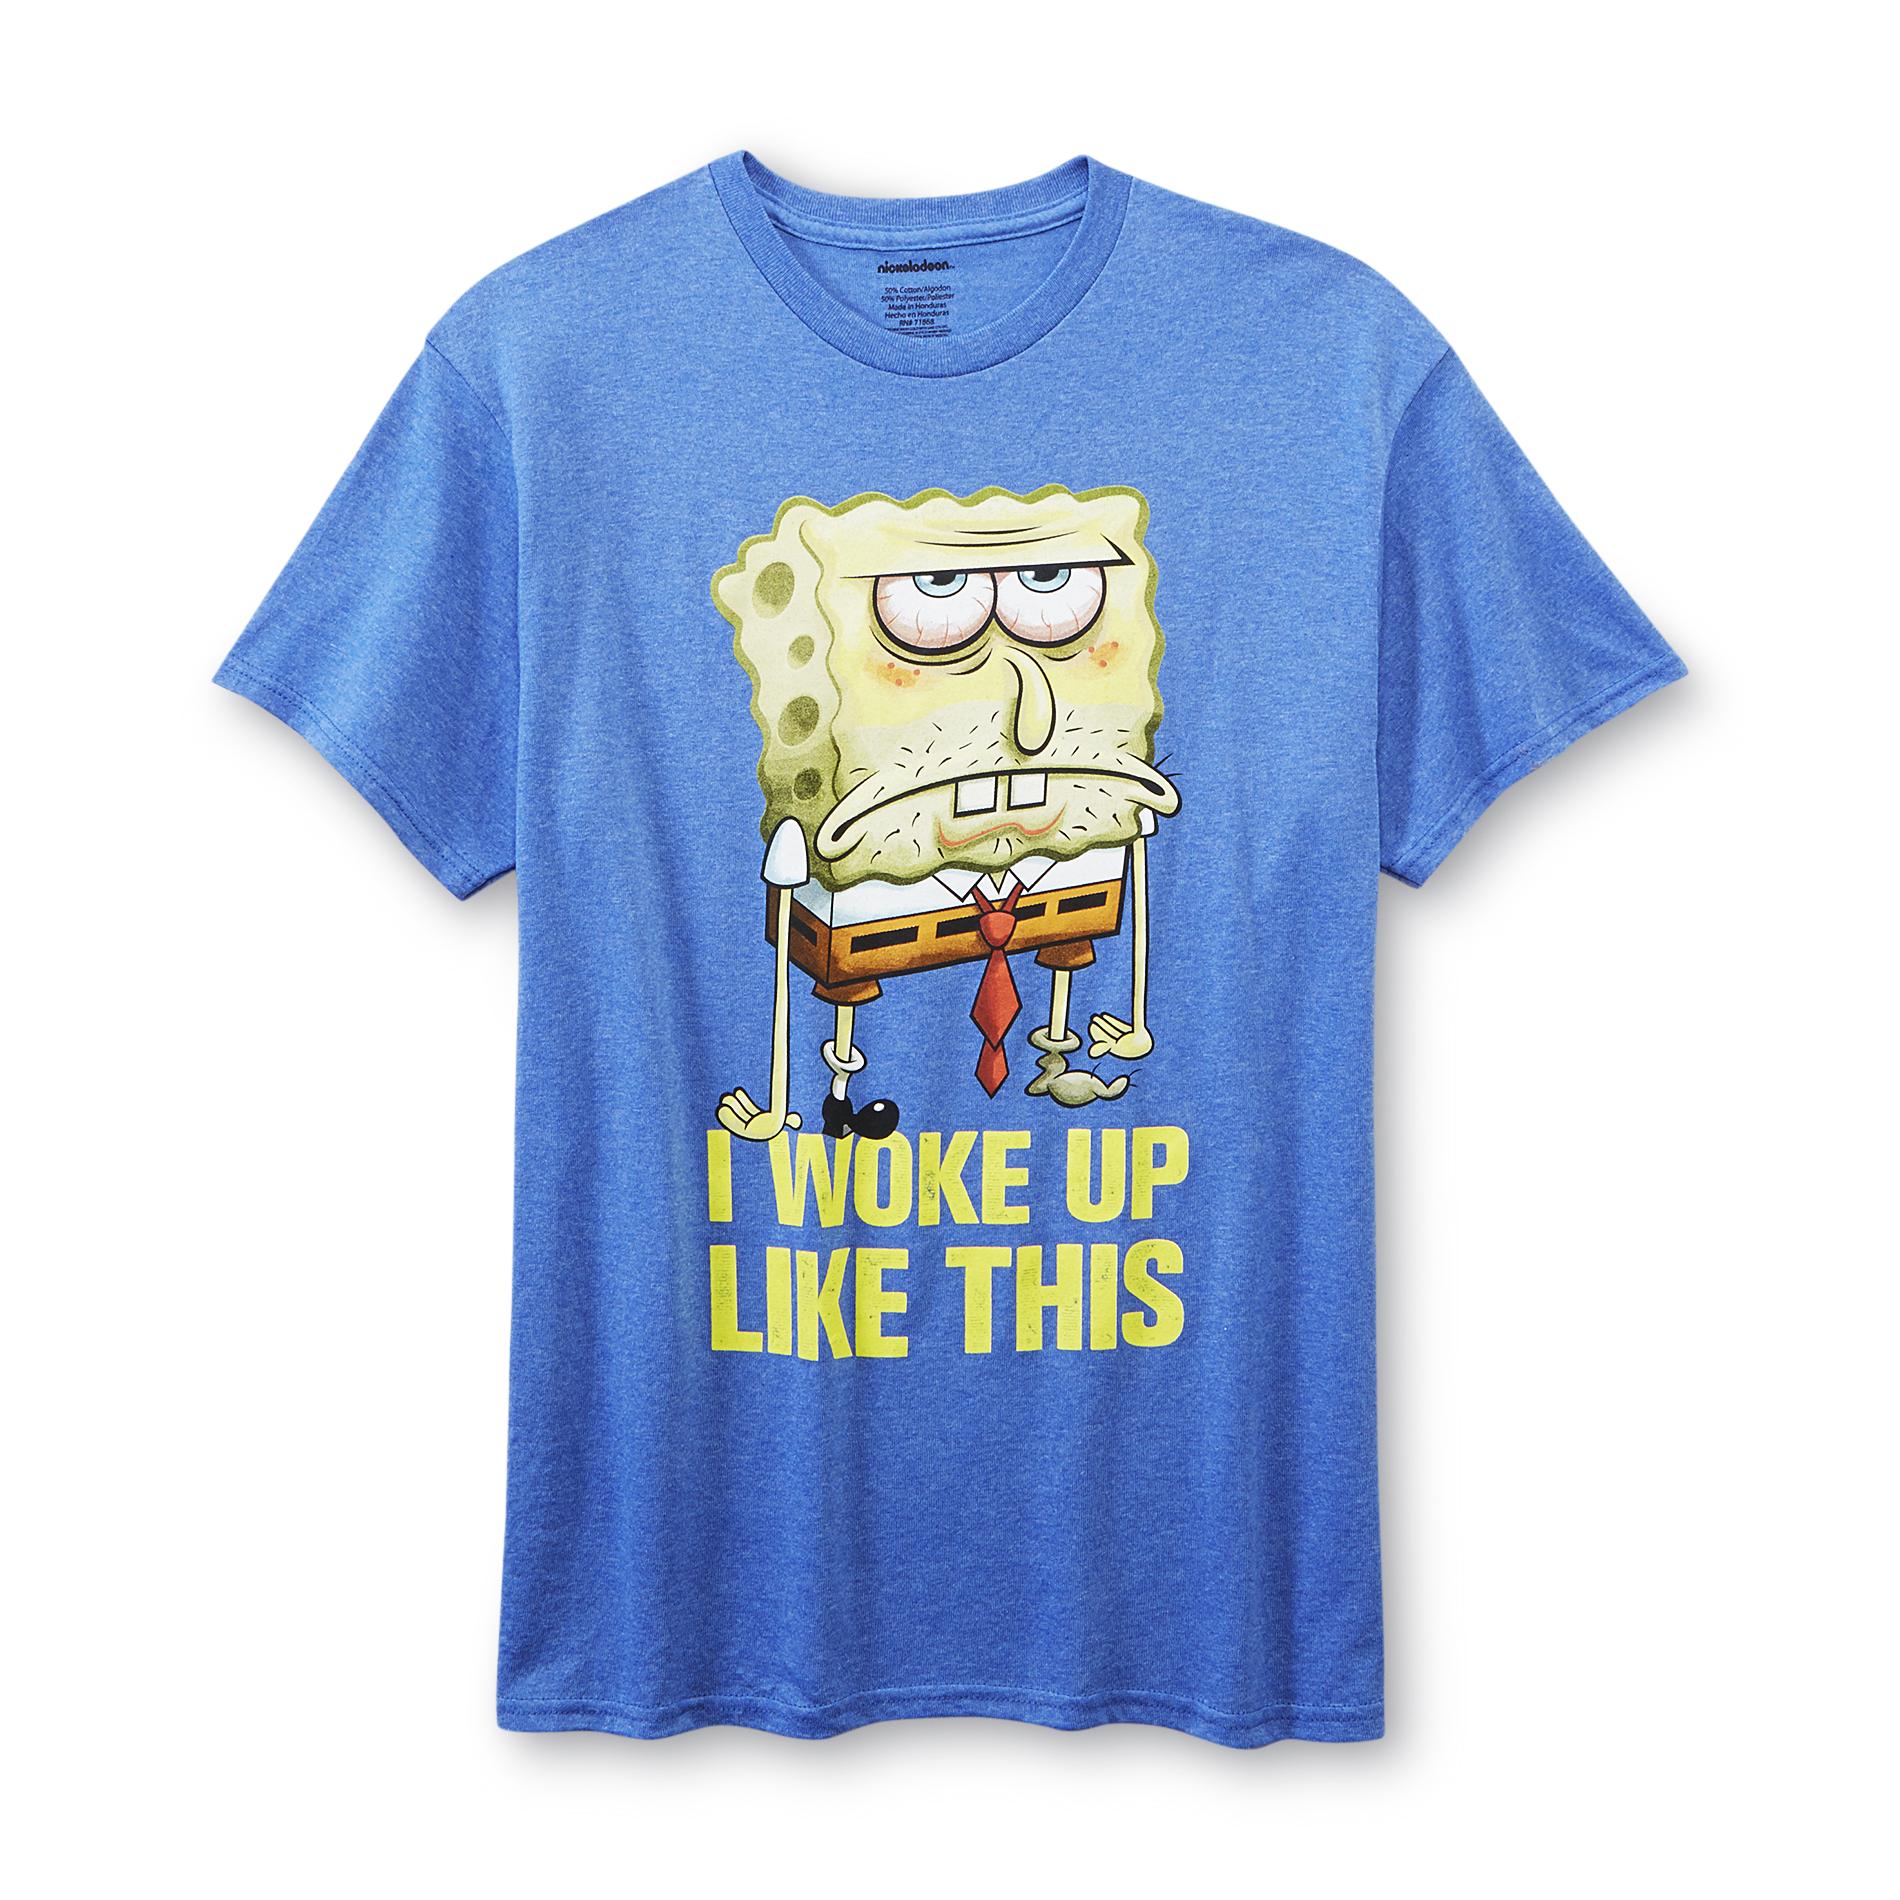 Nickelodeon SpongeBob SquarePants Men's Graphic T-Shirt - I Woke Up Like This